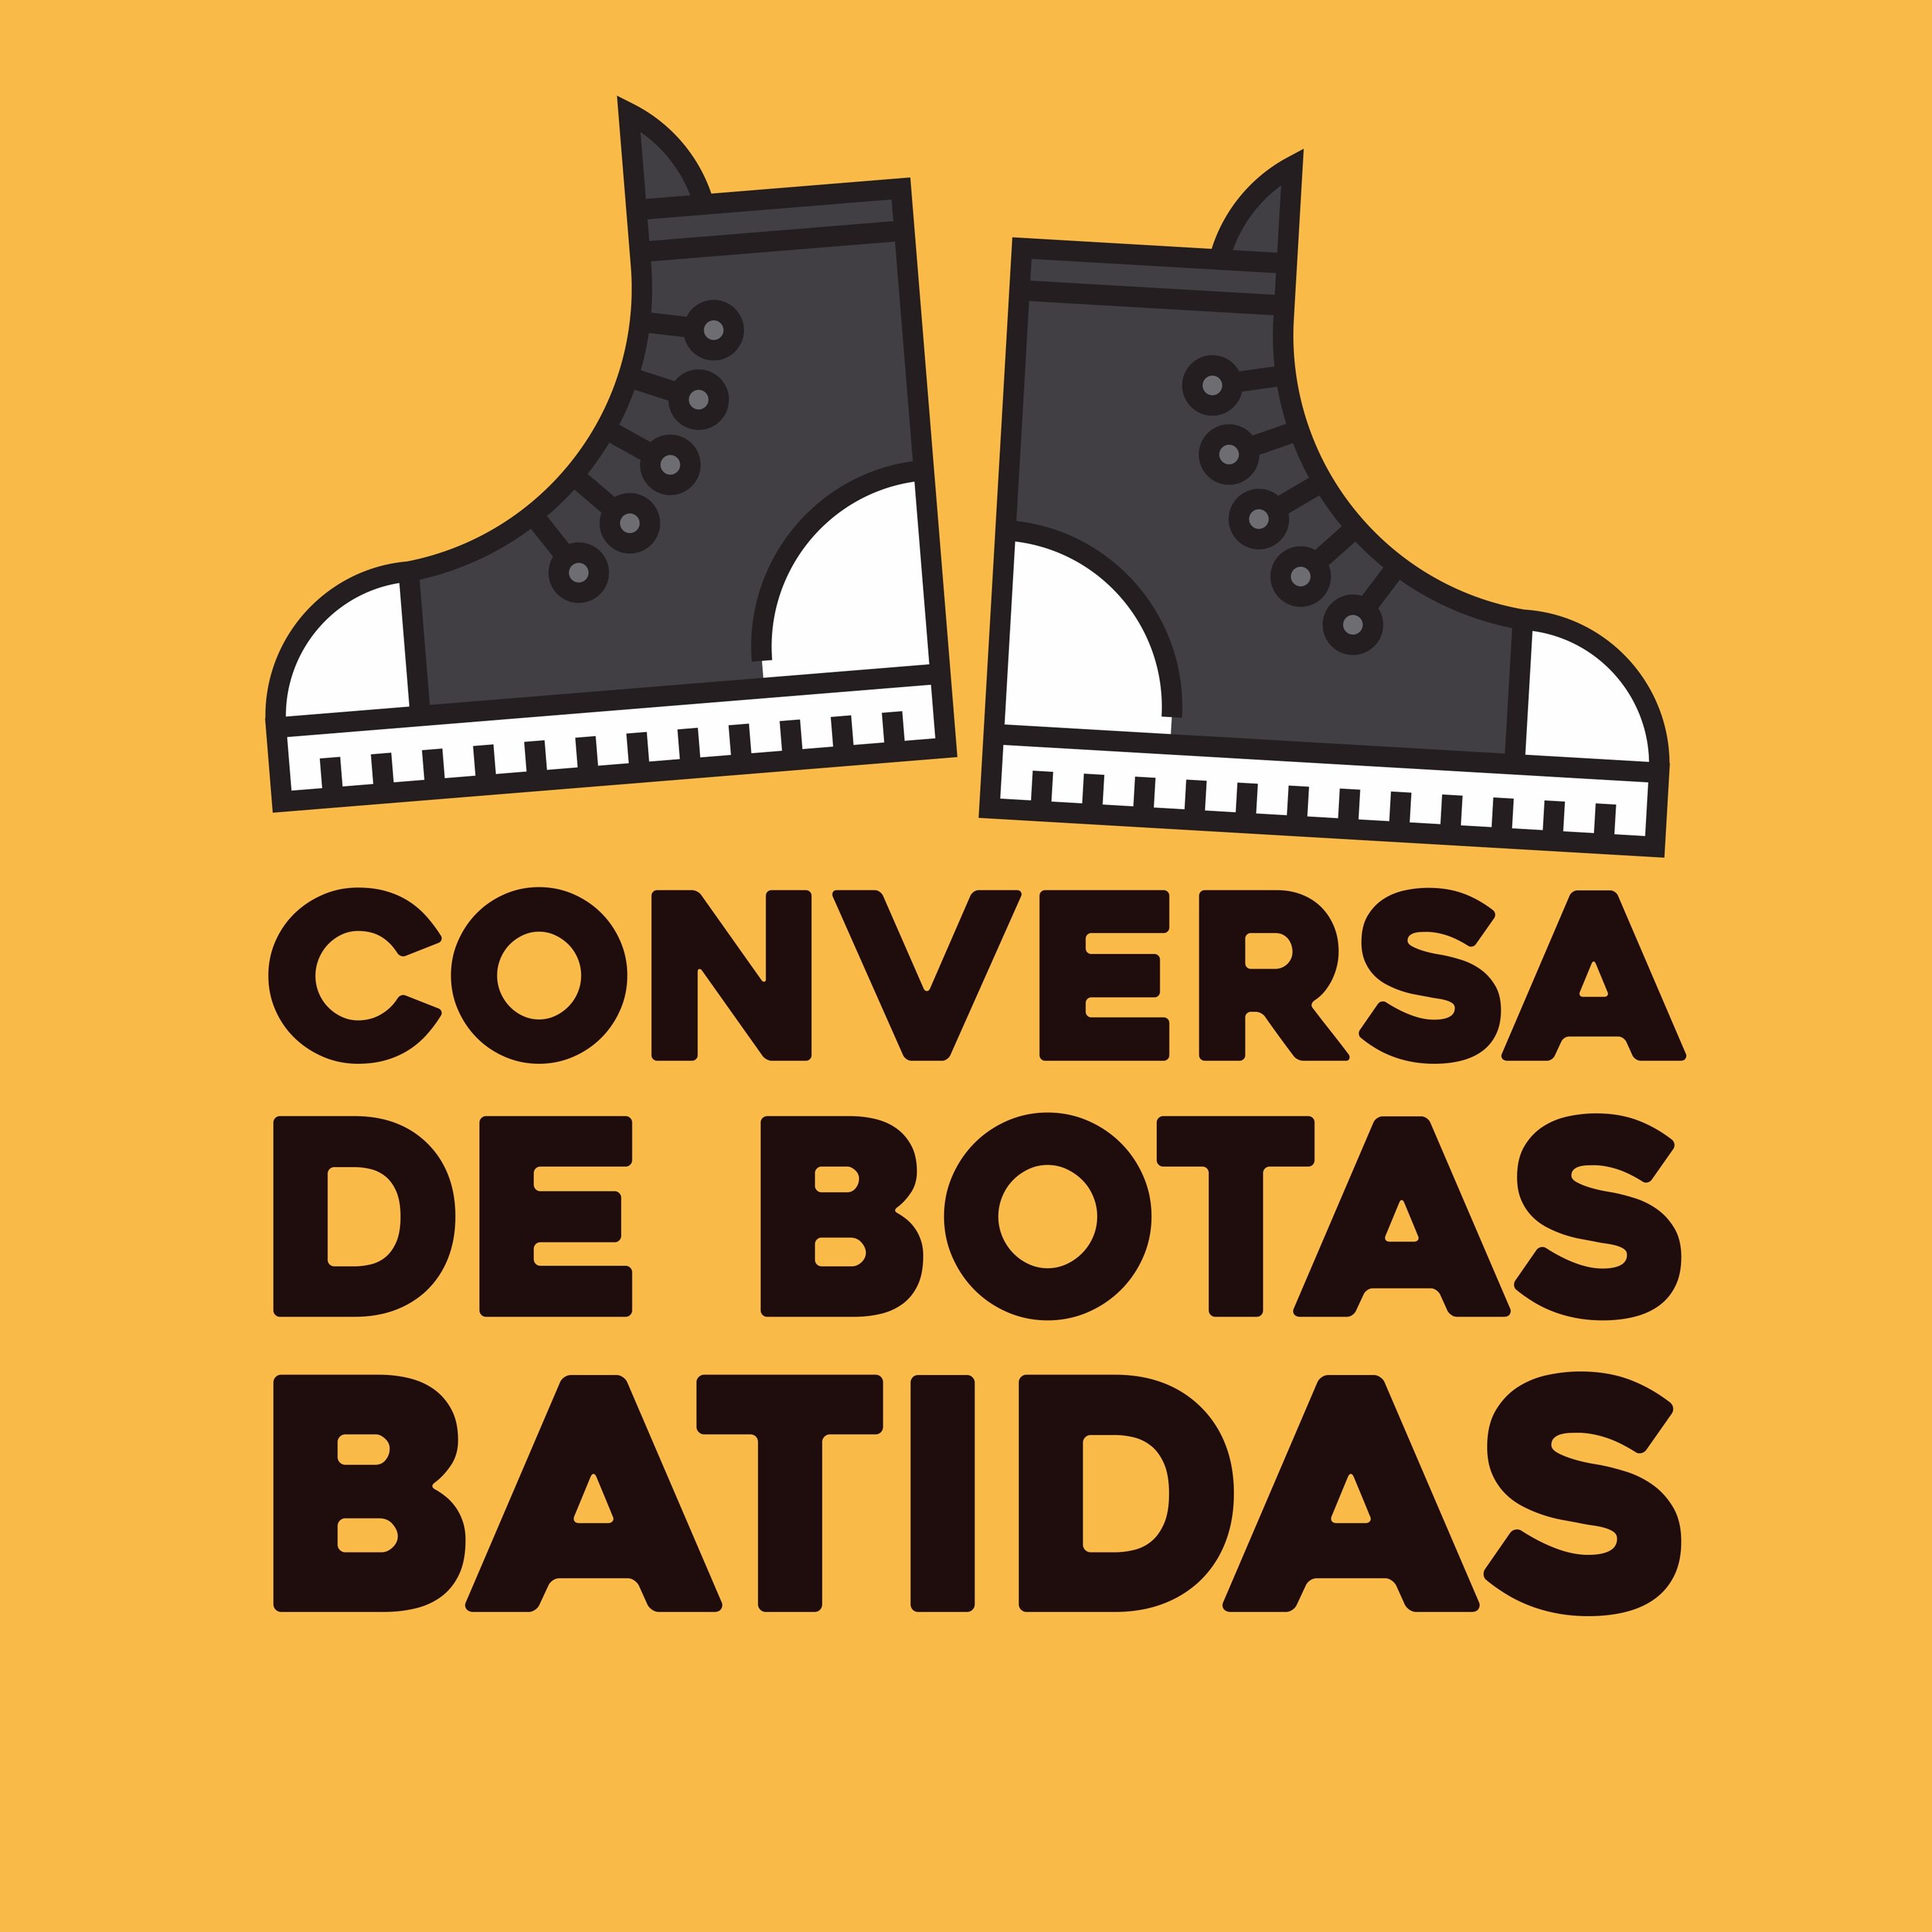 Stream Conversa de Botas Batidas music | Listen to songs, albums, playlists  for free on SoundCloud